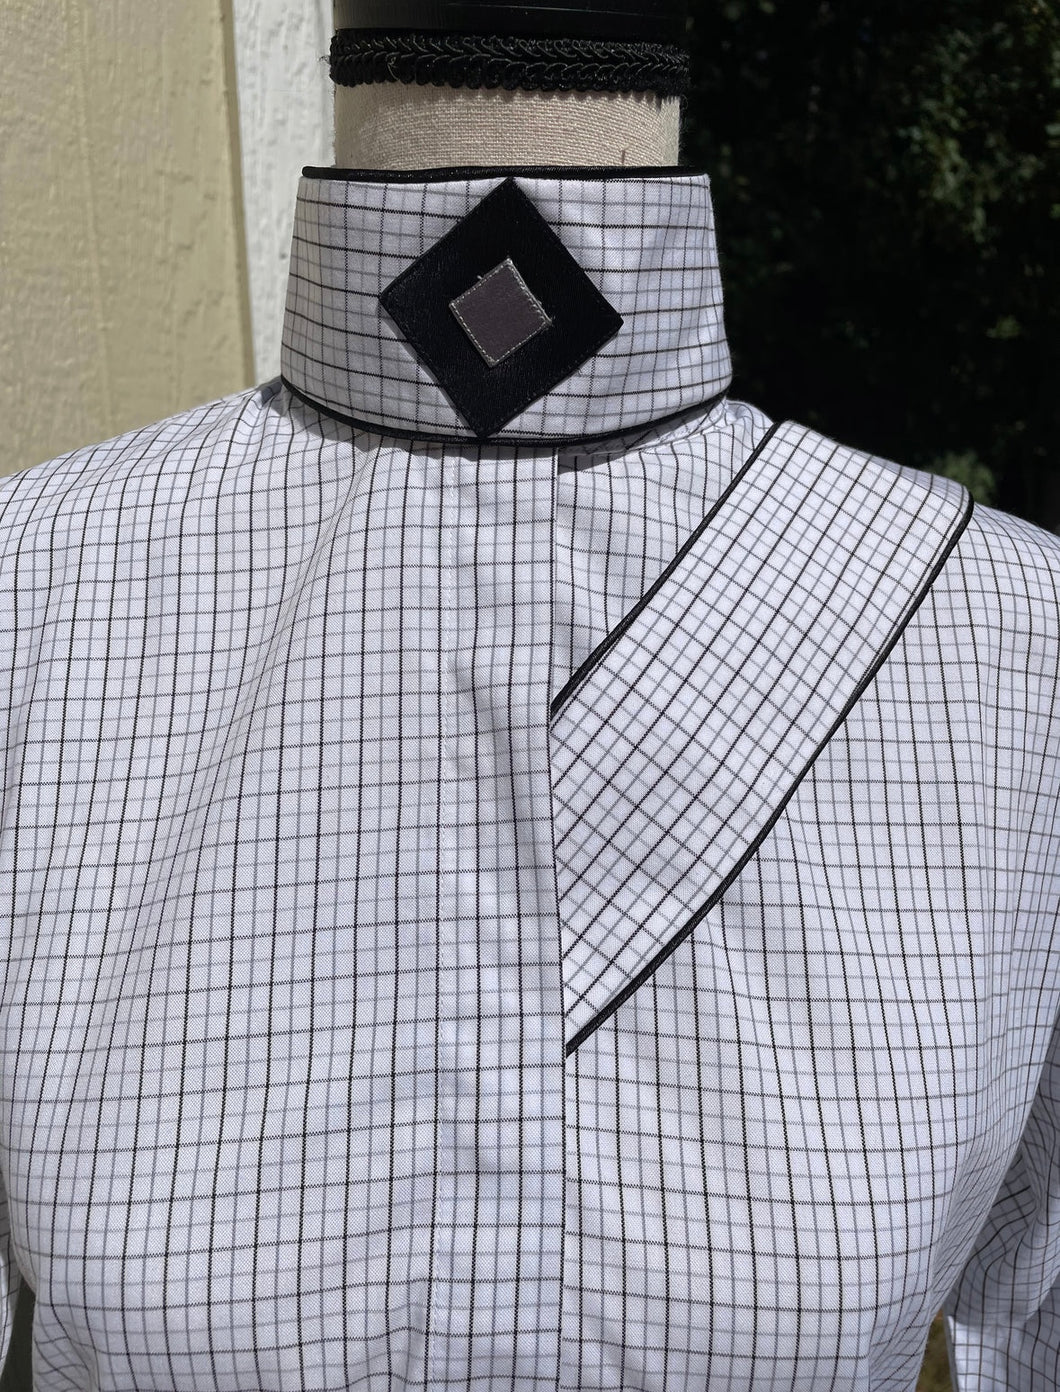 White w/ Black & Gray Squares - Thick Black Stripe & Thin Silver Stripe Collars - Size 40